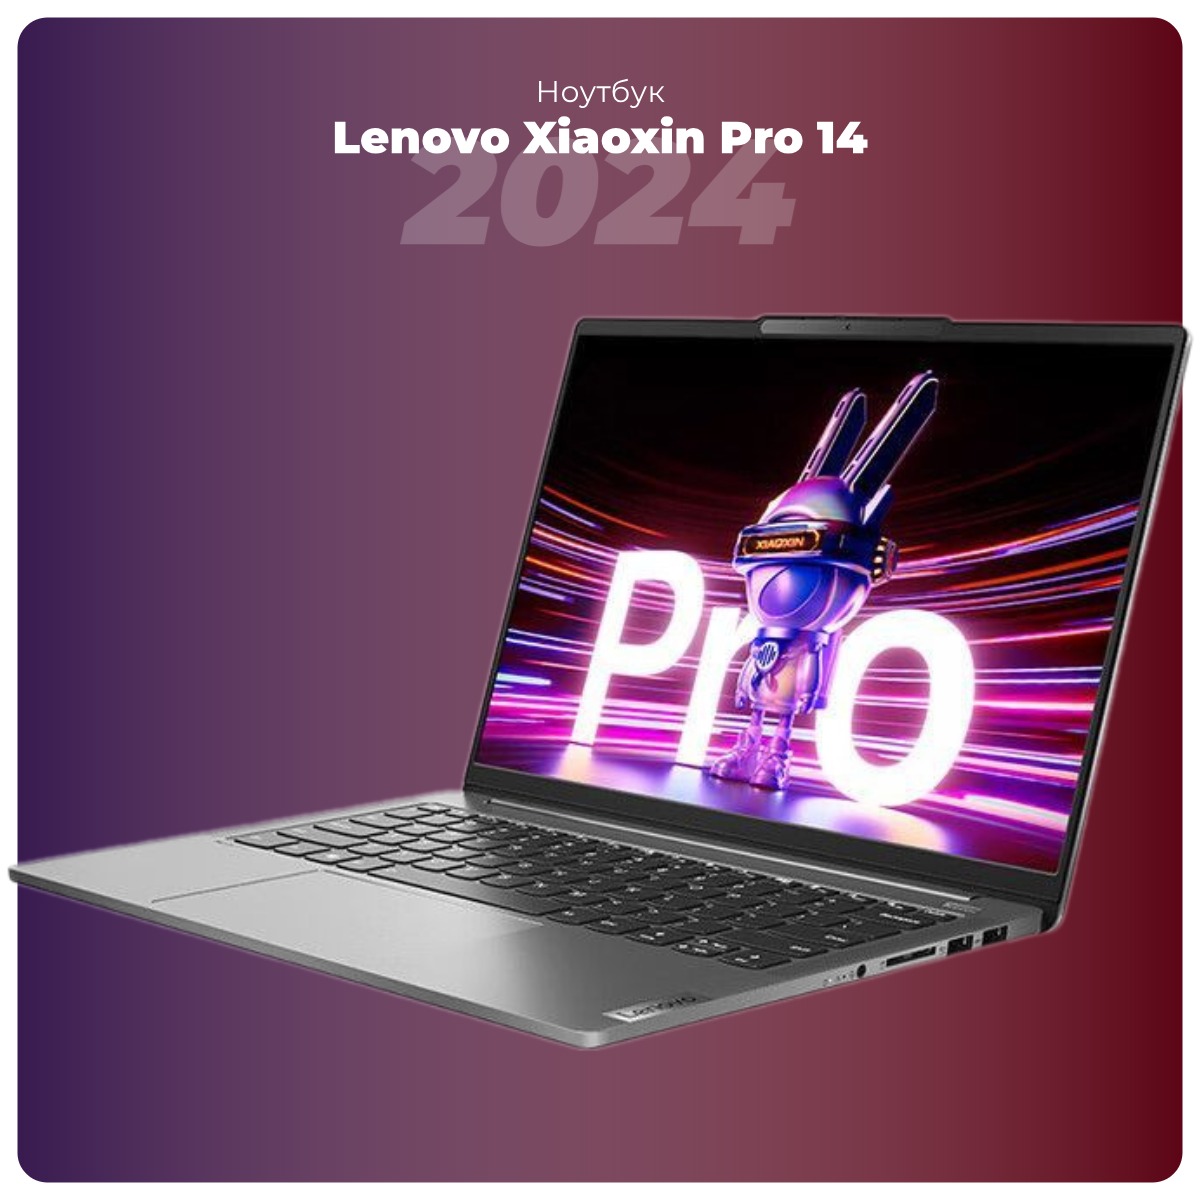 Lenovo-Xiaoxin-Pro-14-2024-AHP9-01